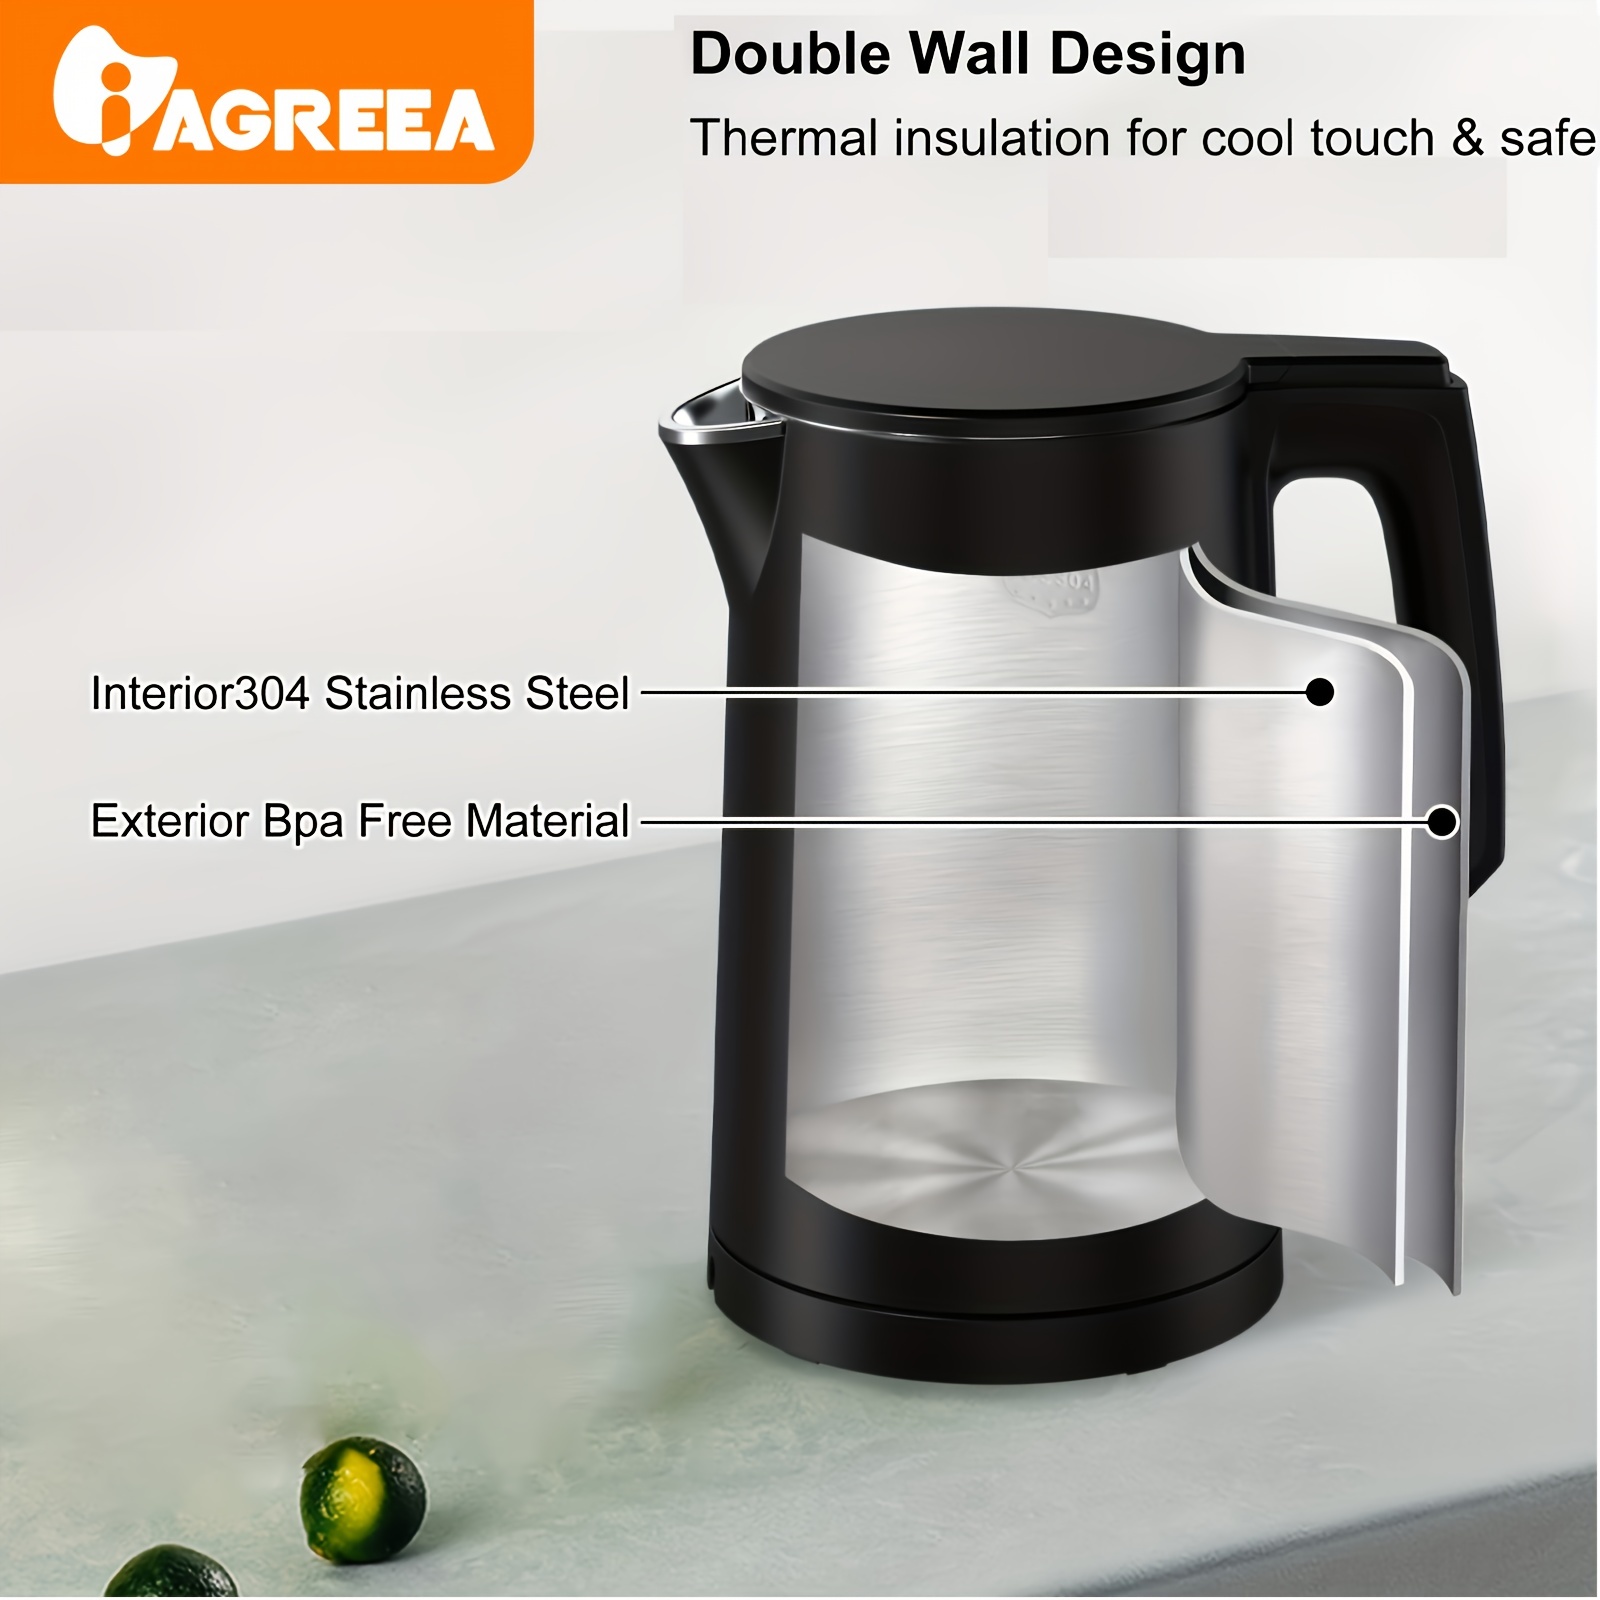 Dezin 1.5L BPA Free Double Wall Electric Kettle Instructions Manual